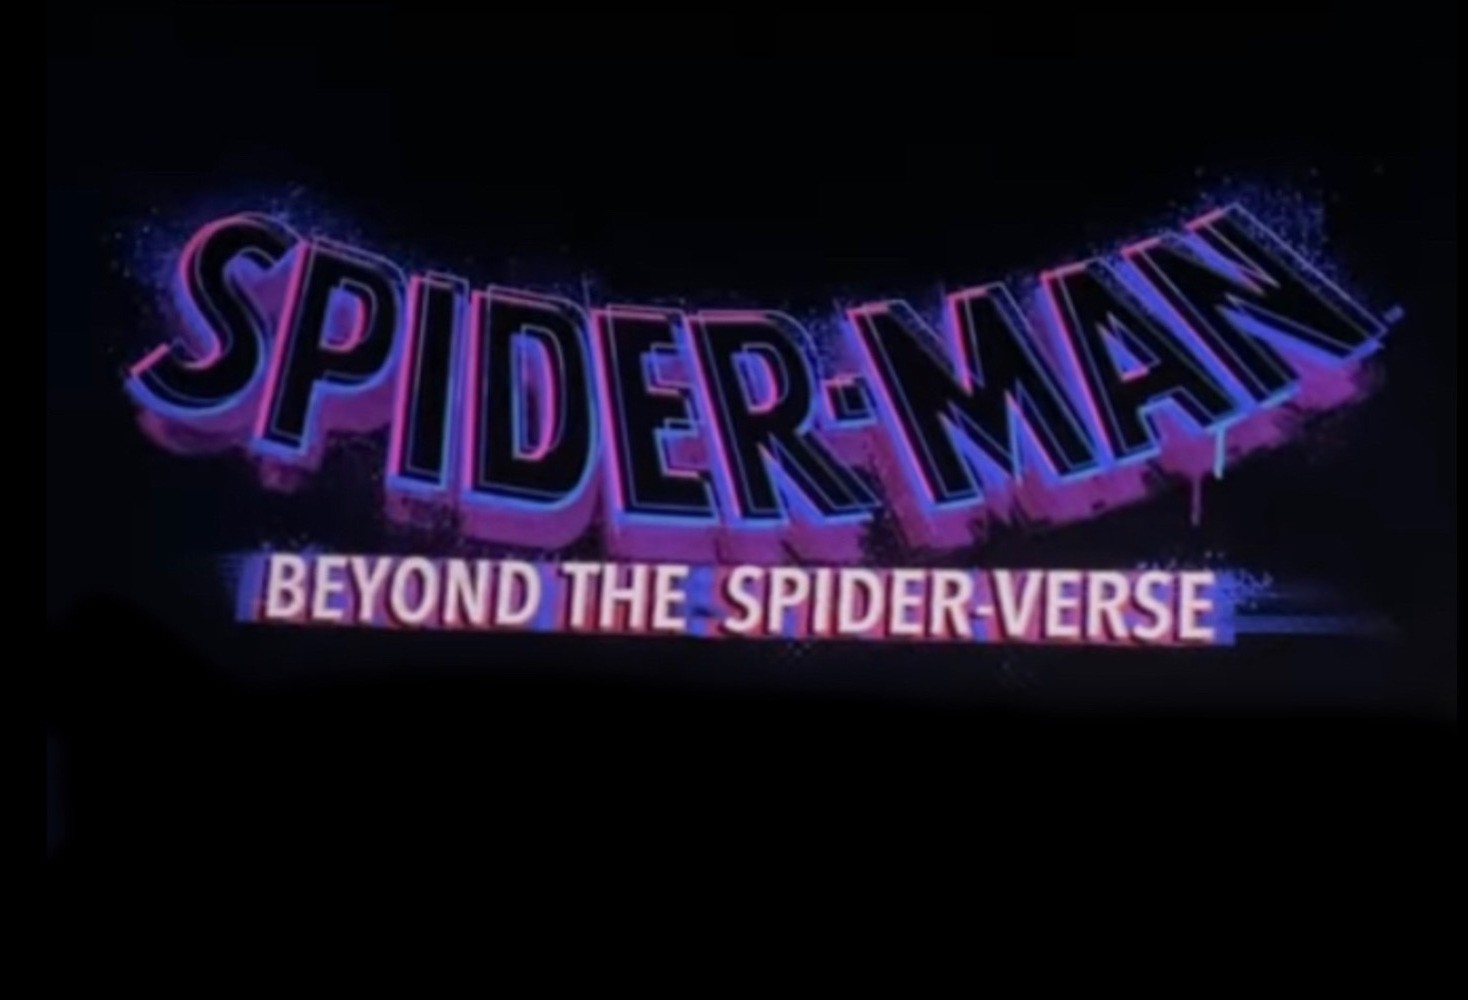 Spider-Man: Beyond the Spiderverse